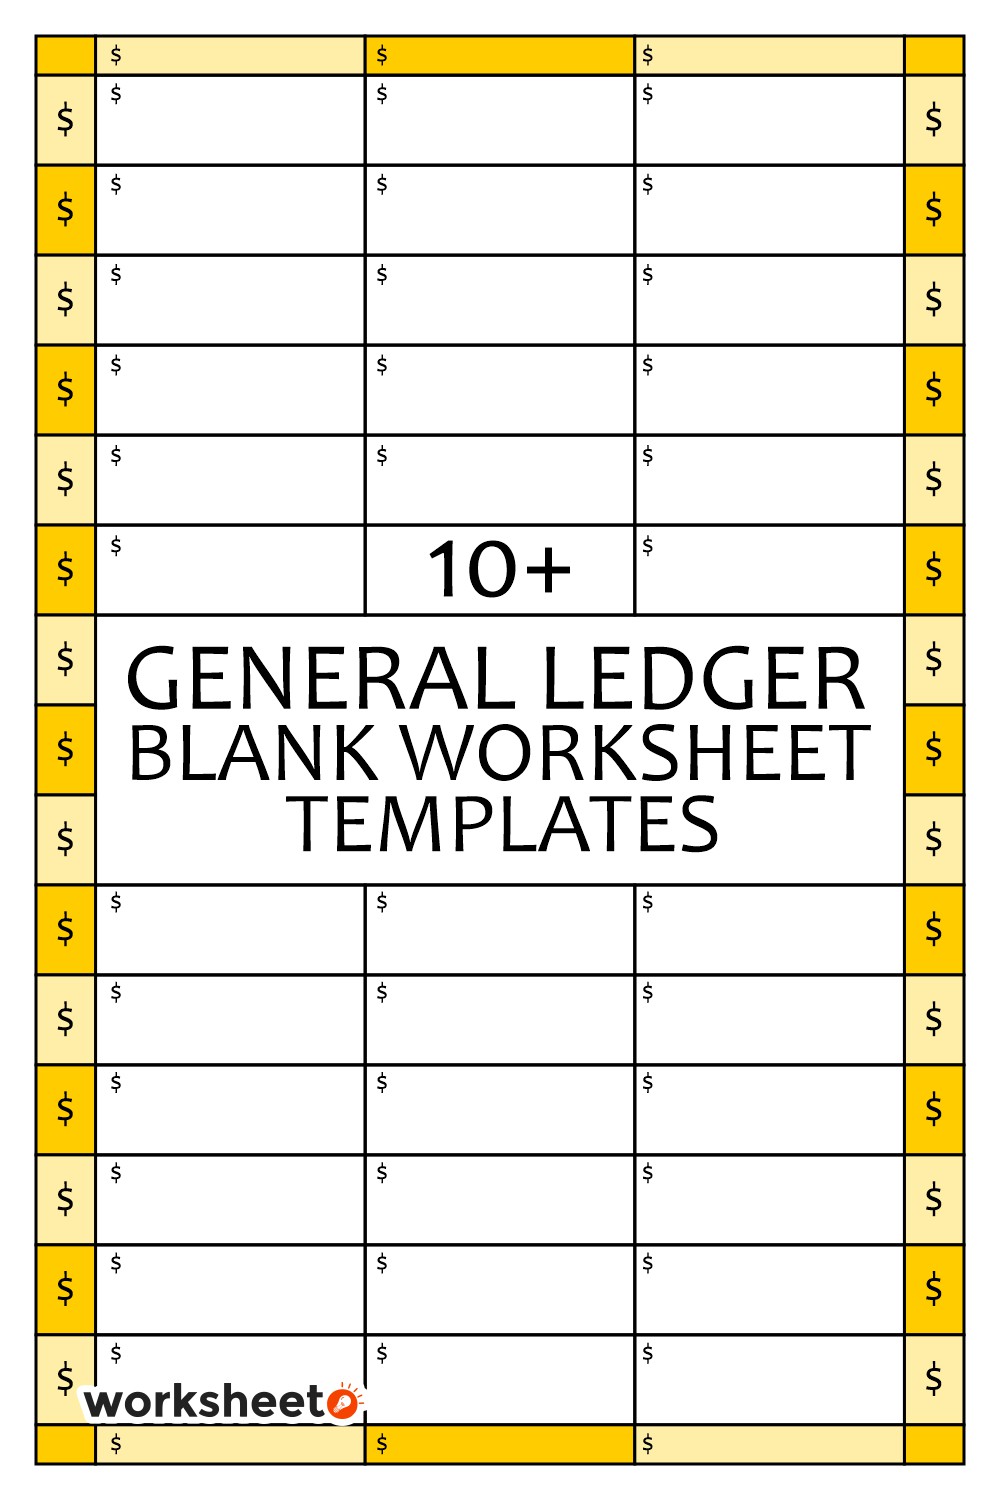 General Ledger Blank Worksheet Templates